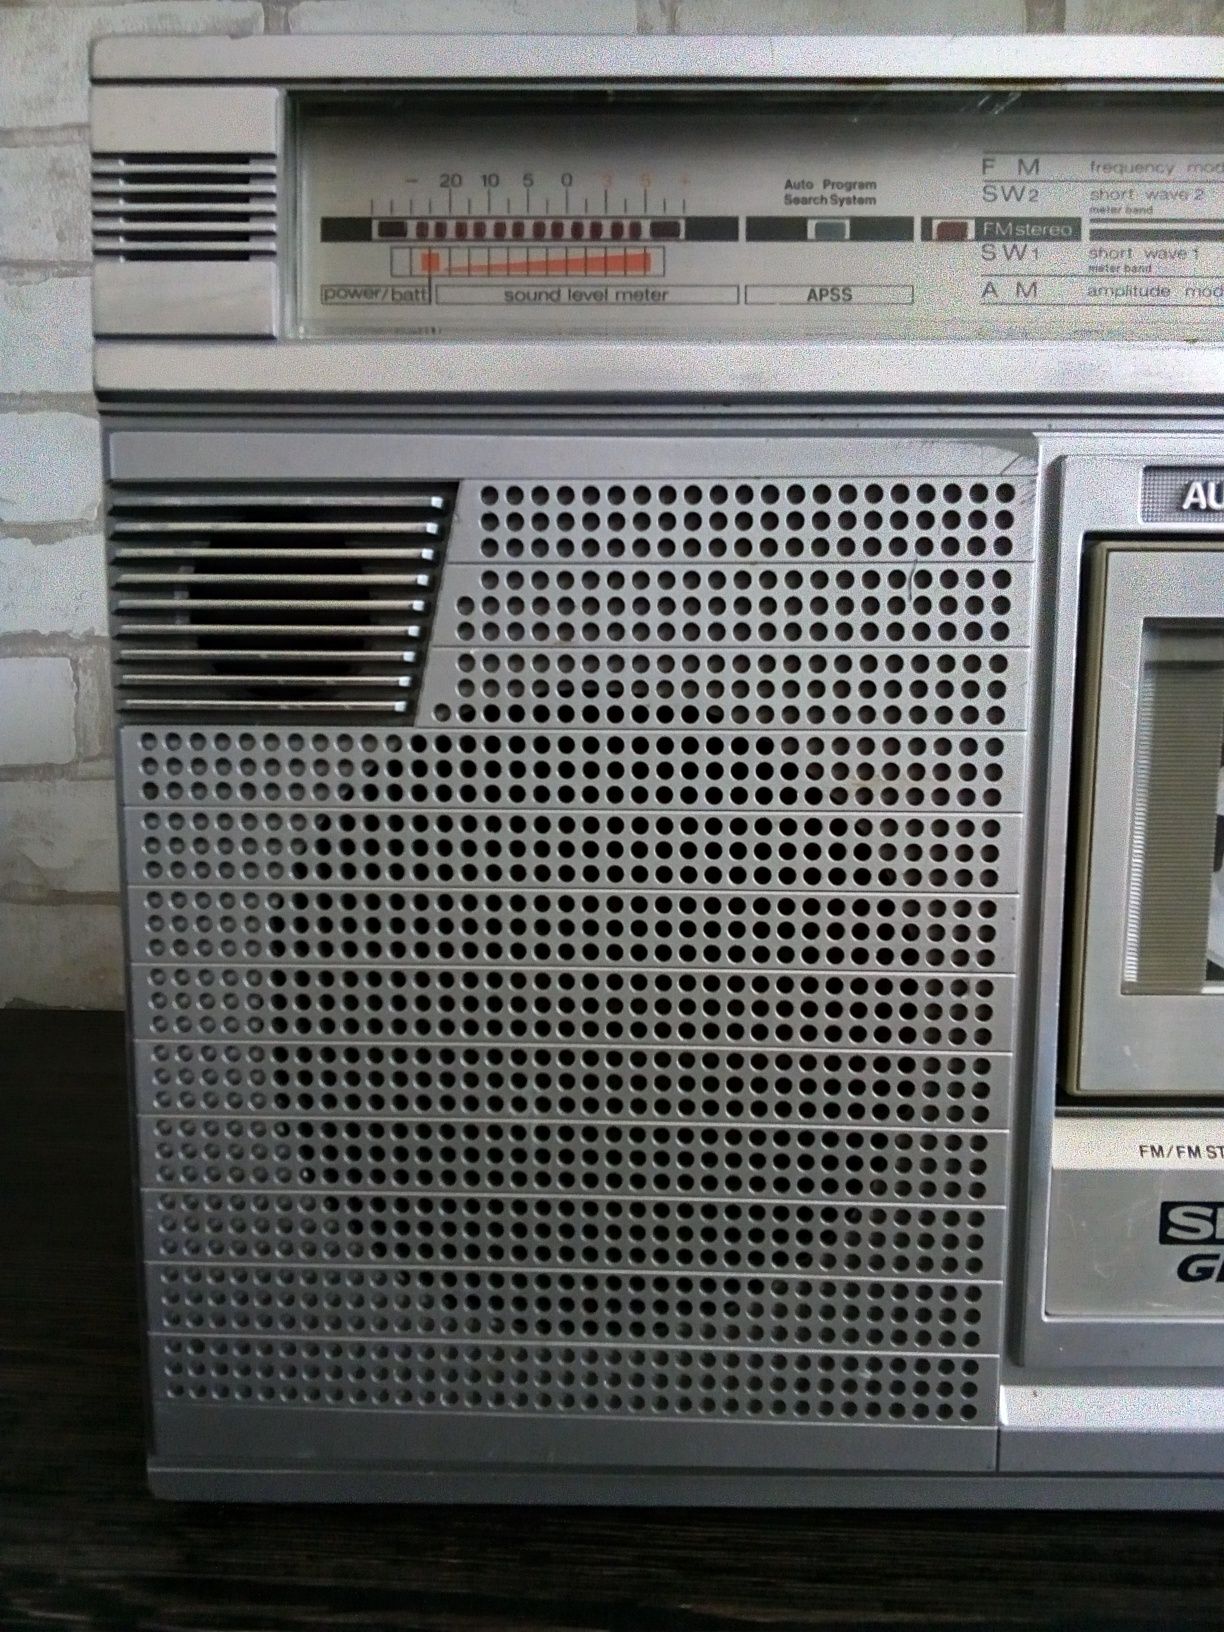 Sharp GF-6161Z Stereo Radio-Tape Recorder 1982